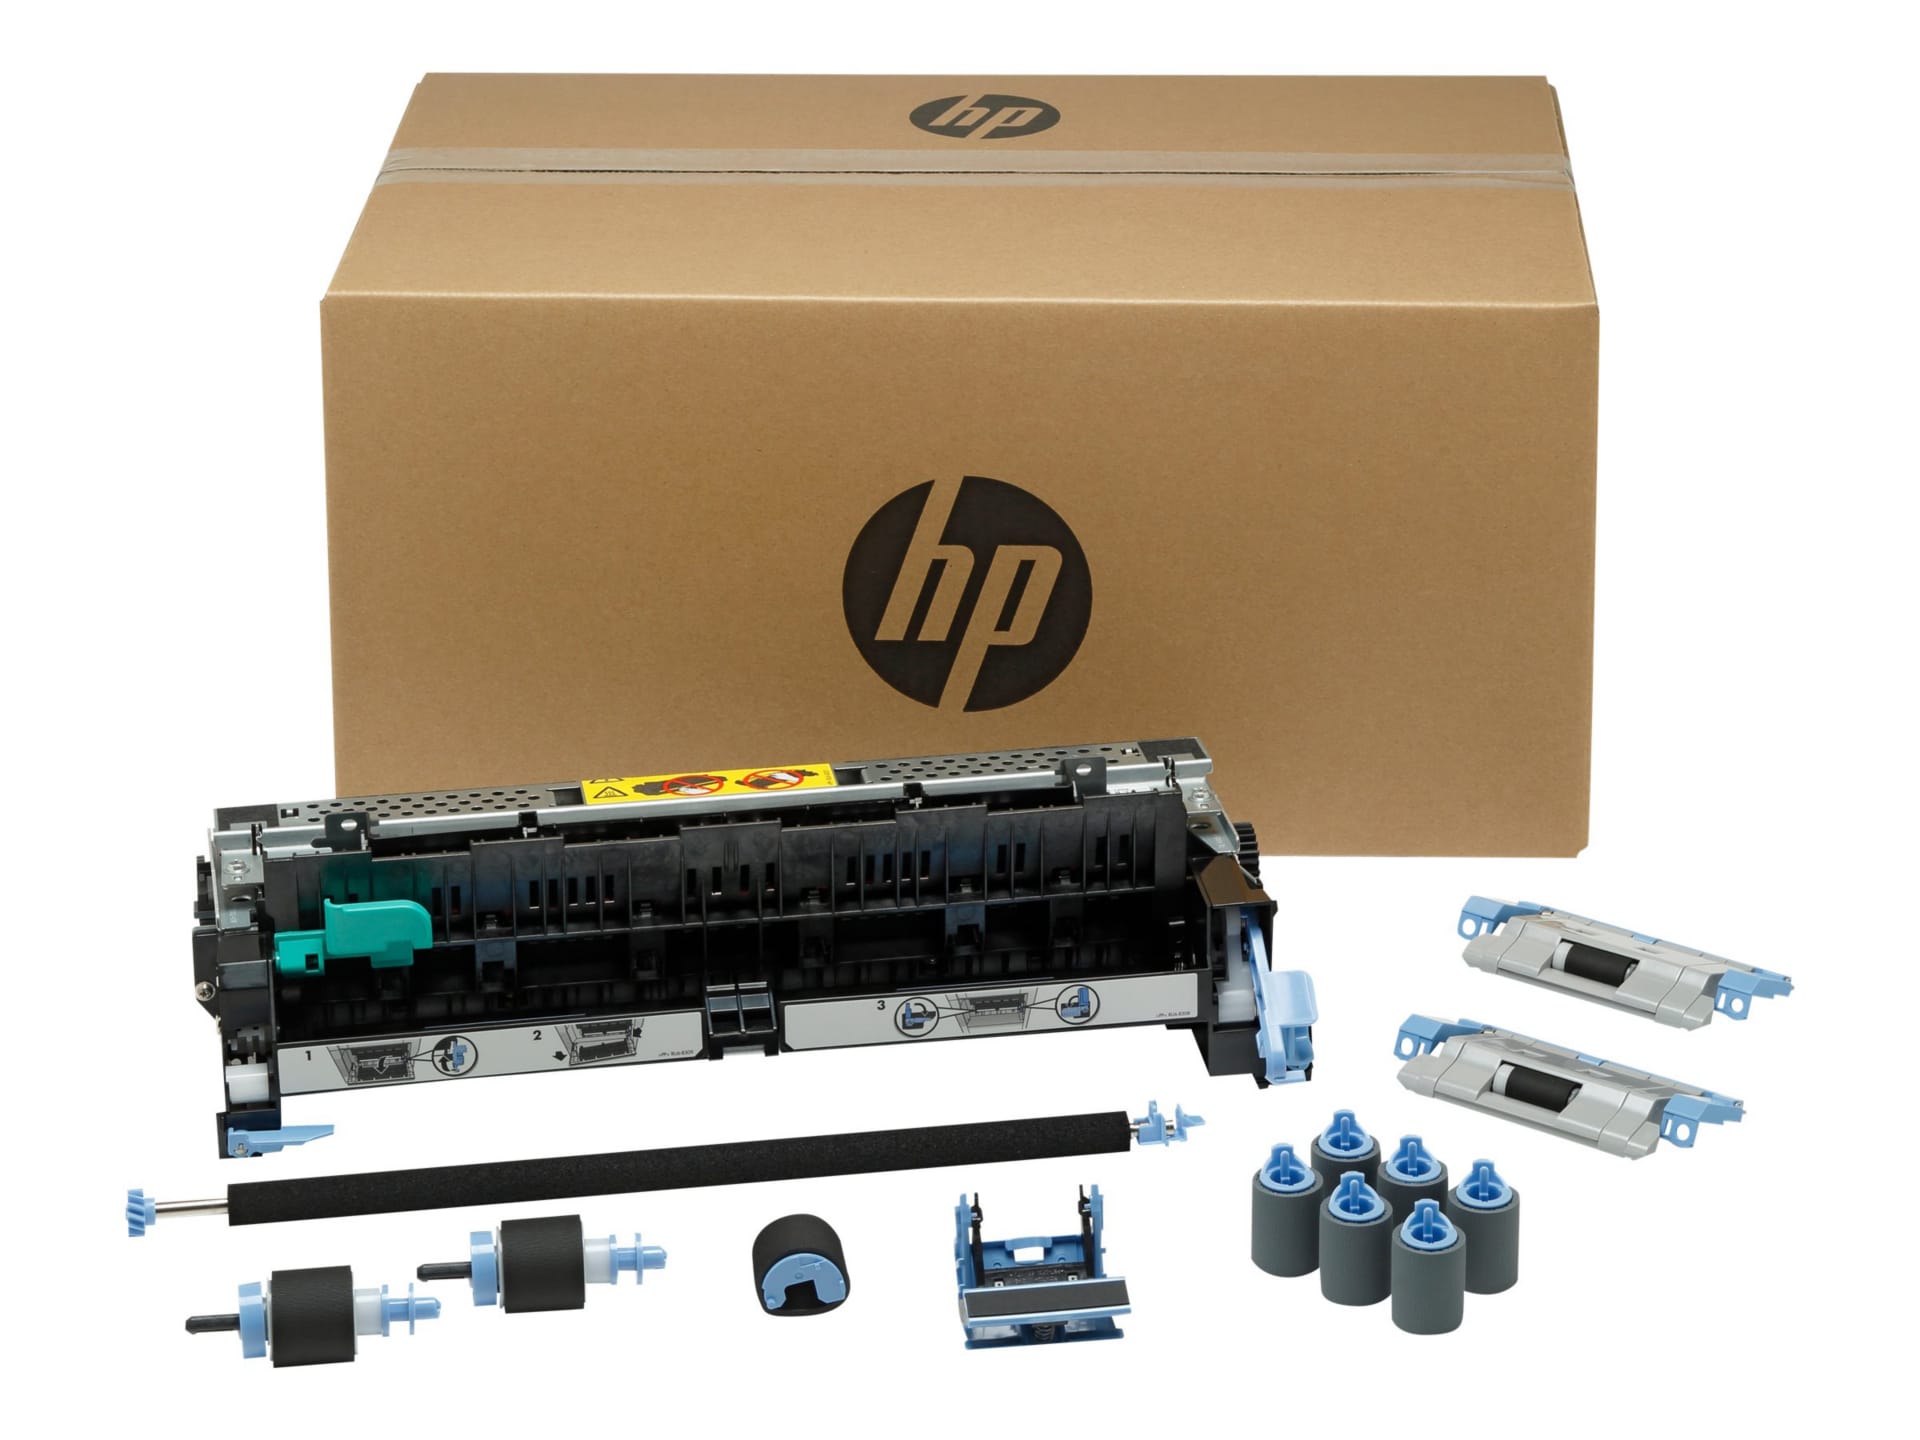 HP Printer Maintenance Fuser Kit for Enterprise 700 Series